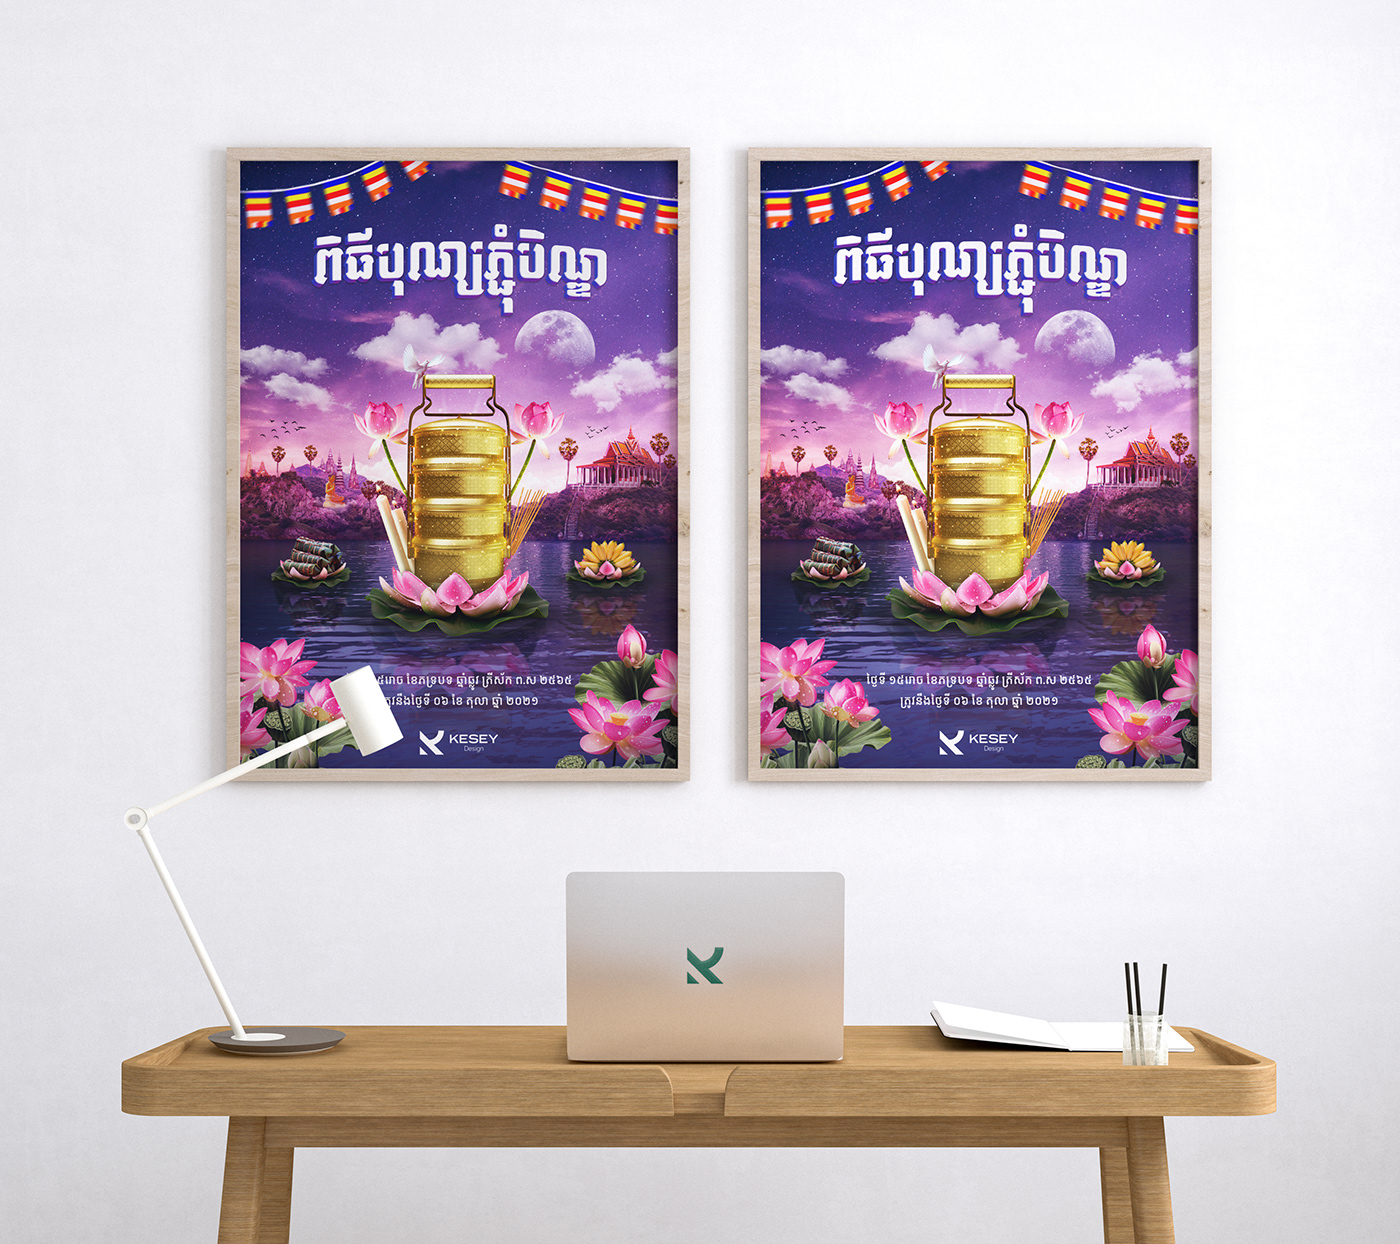 Cambodia Khmer Artwork Khmer Posters Pchum Ben Day Pchum Ben Poster Poster Design បុណ្យ​ភ្ជុំបិណ្ឌ ពិធីបុណ្យភ្ជុំបិណ្ឌ ភ្ជុំបិណ្ឌ២០២១